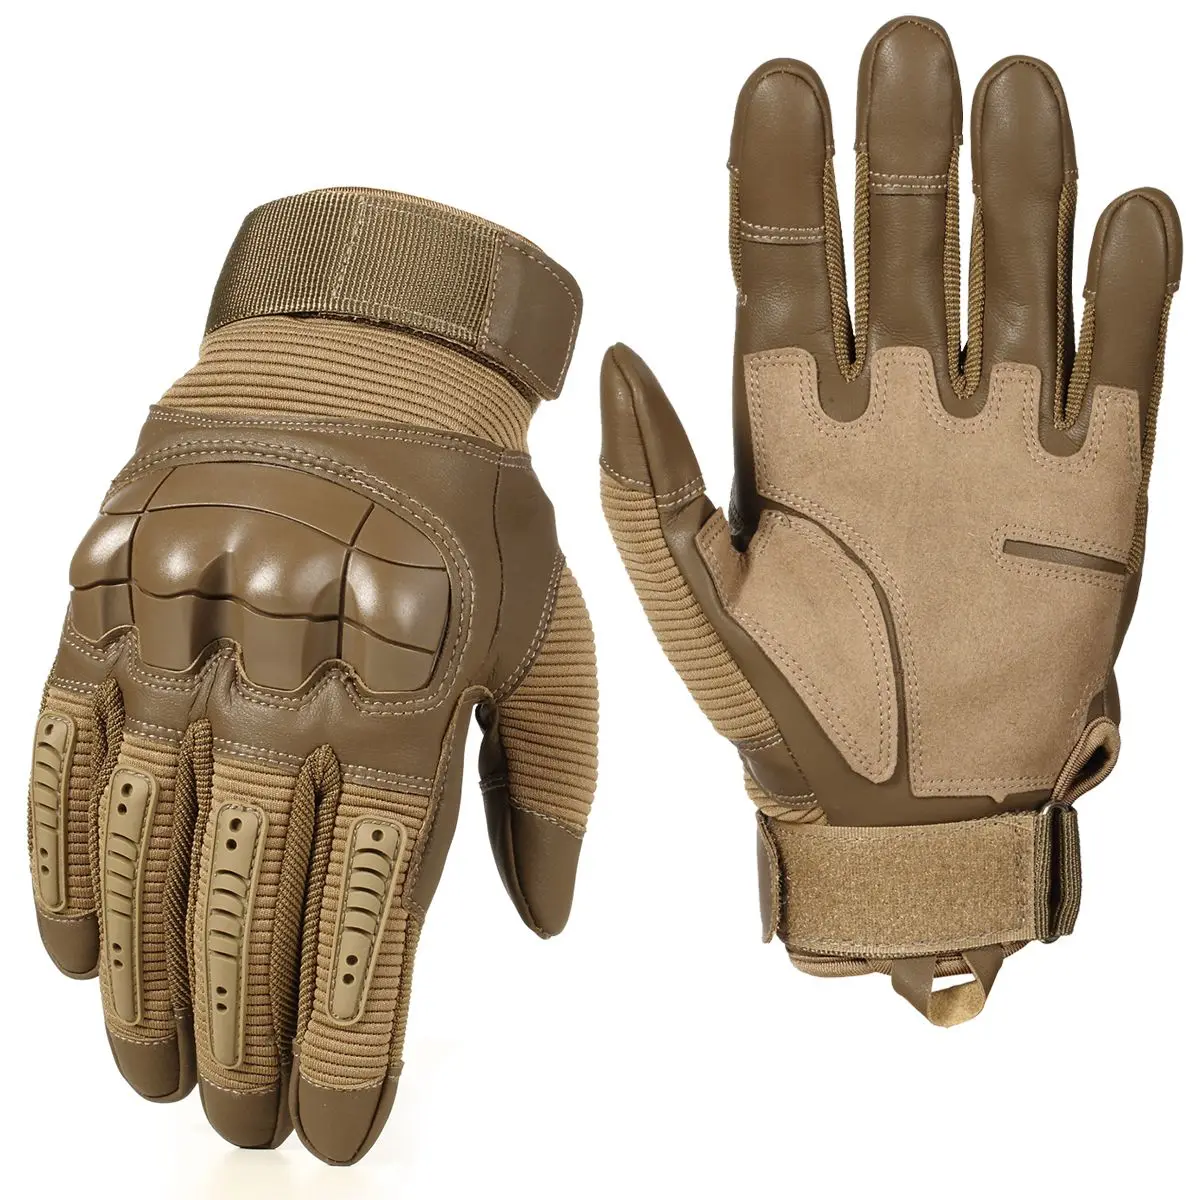 Shopnii.com Premium Tactical Gloves